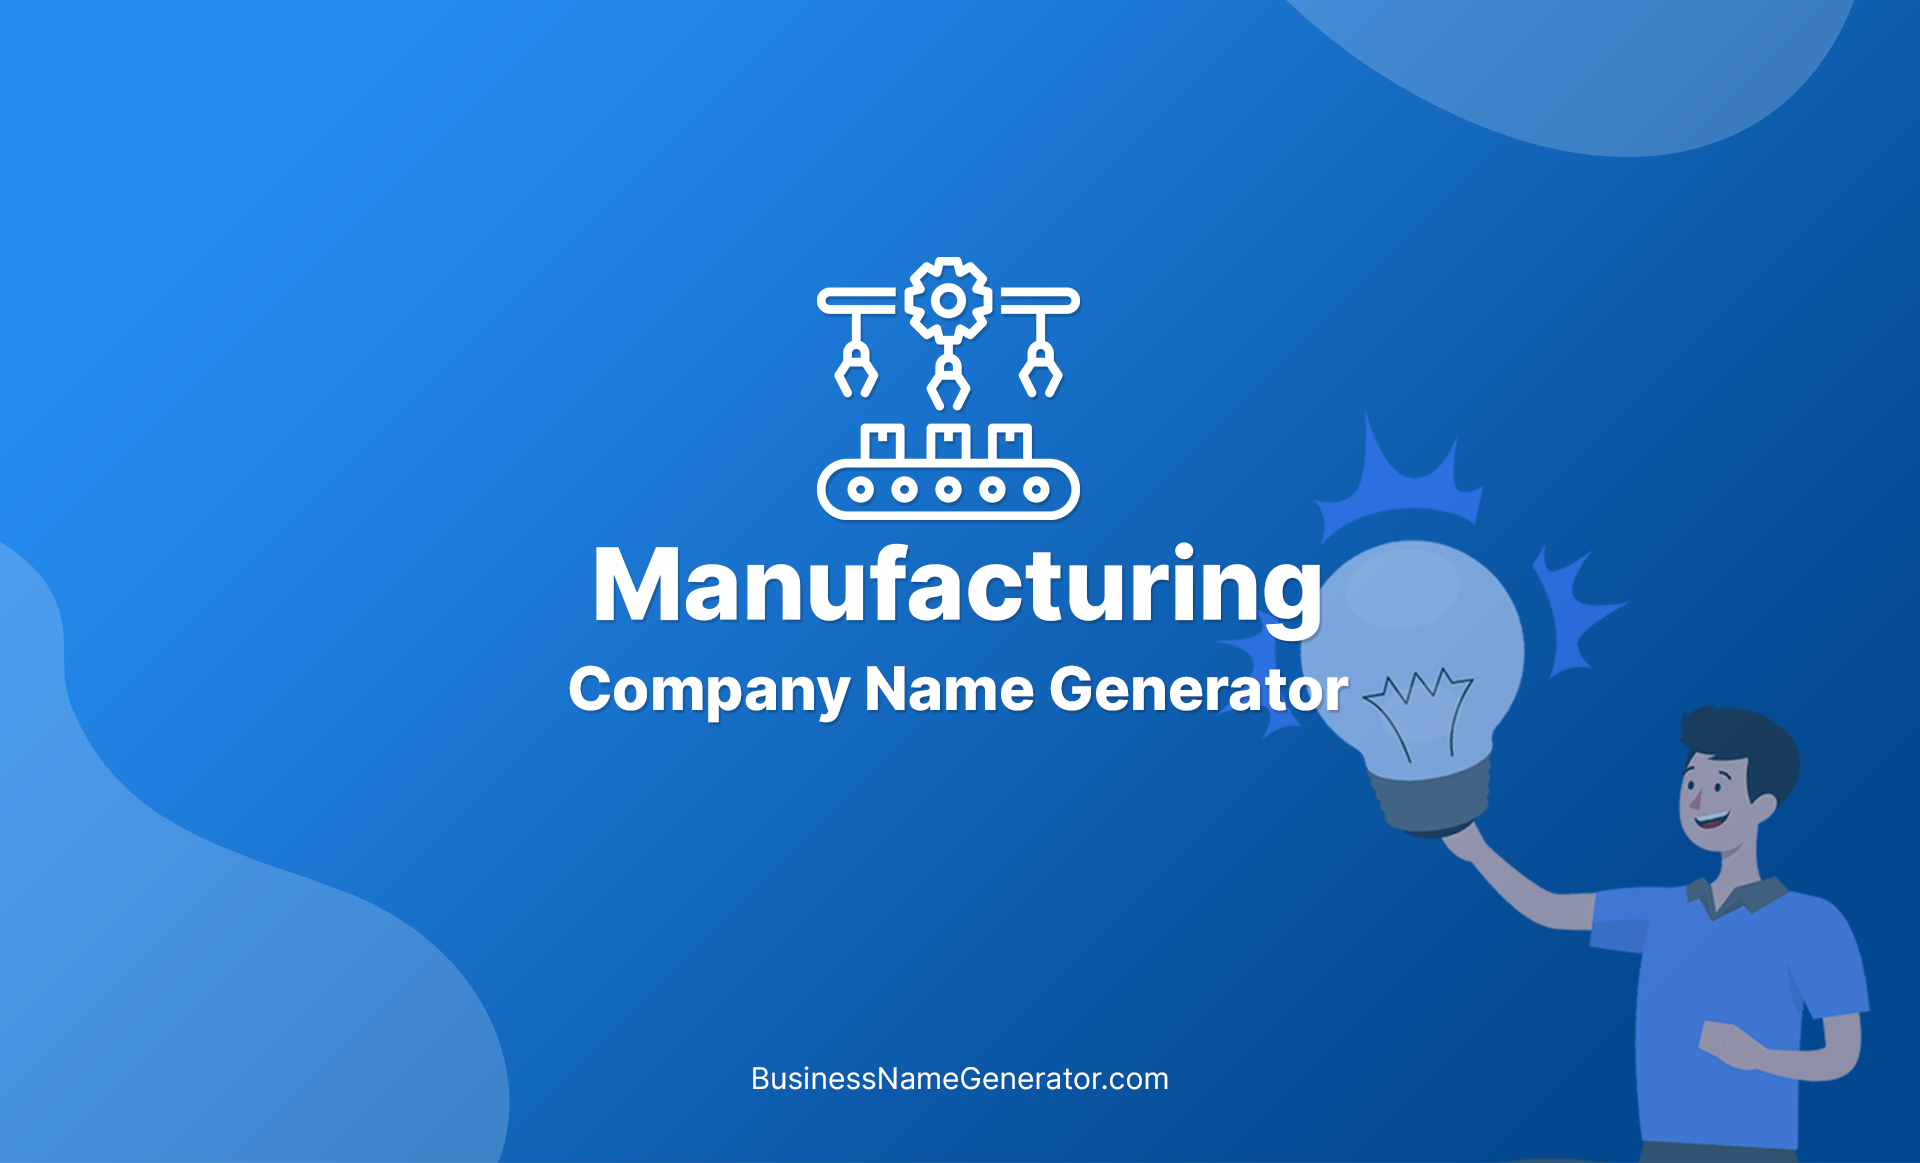 Manufacturing Company Name Generator